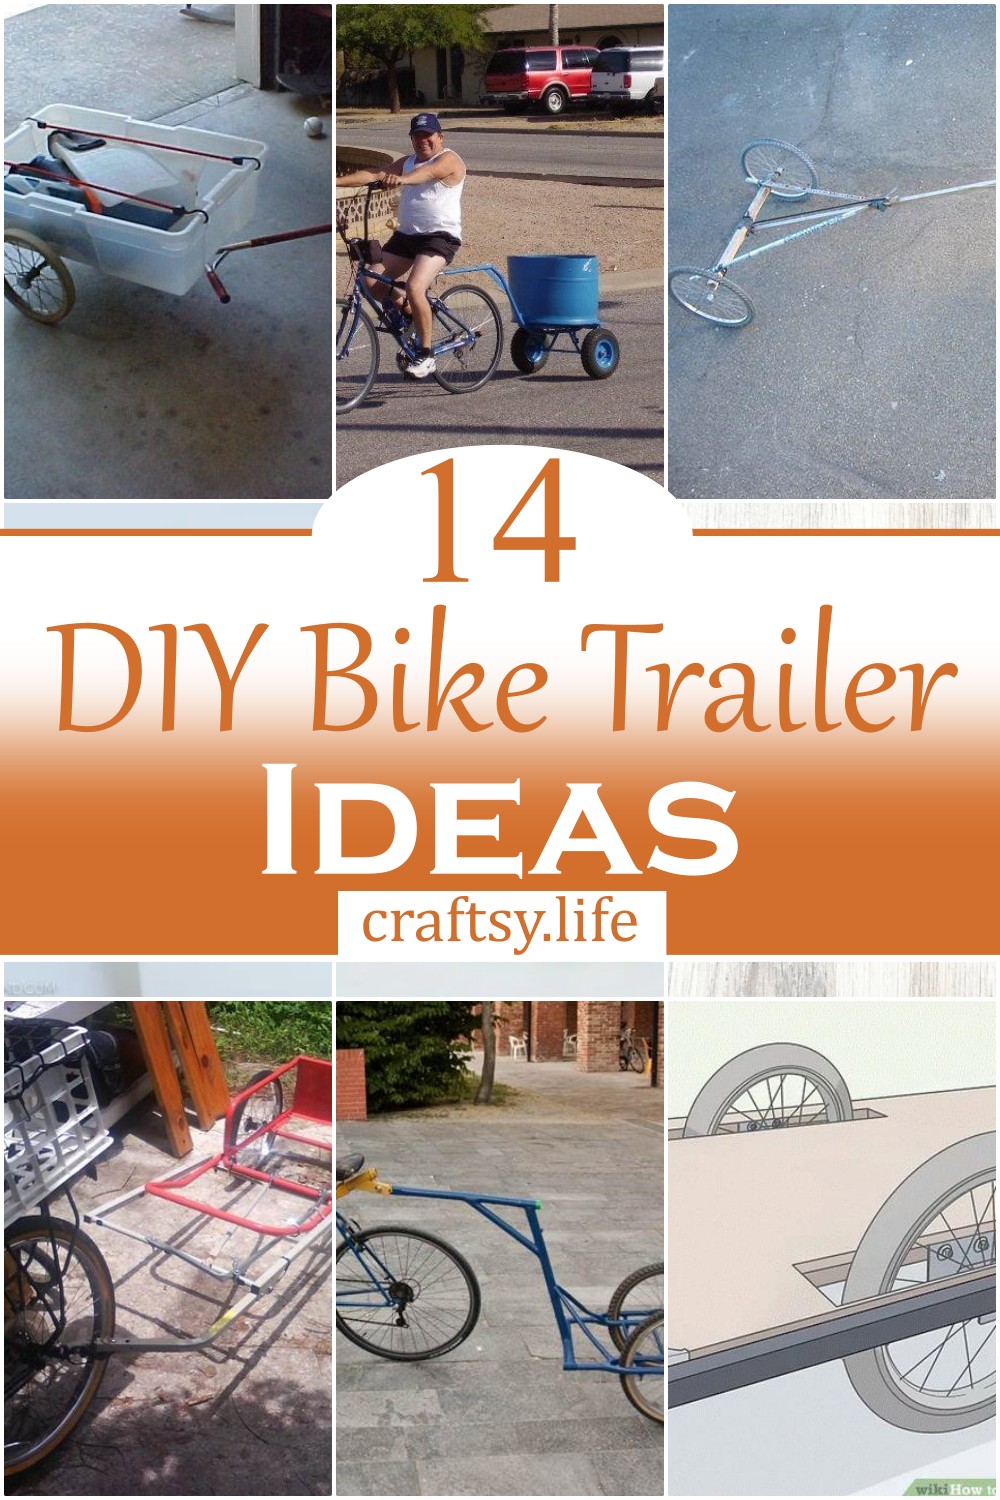 DIY Bike Trailer Ideas